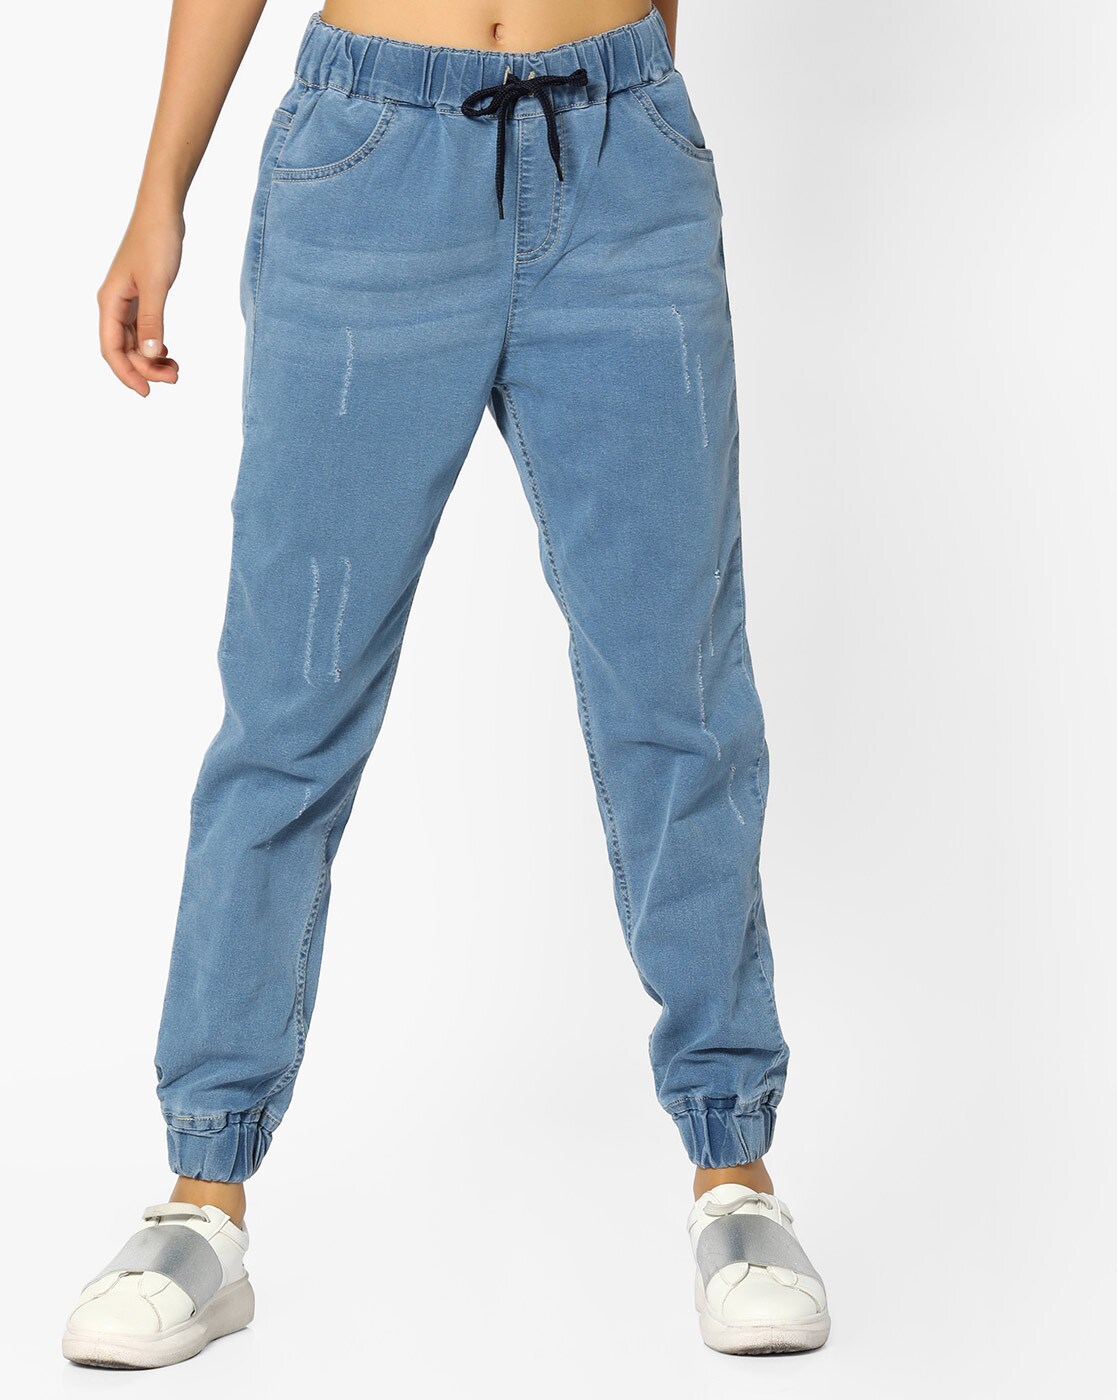 Just Jeans Official Site | Womens, Mens & Kids Branded Denim